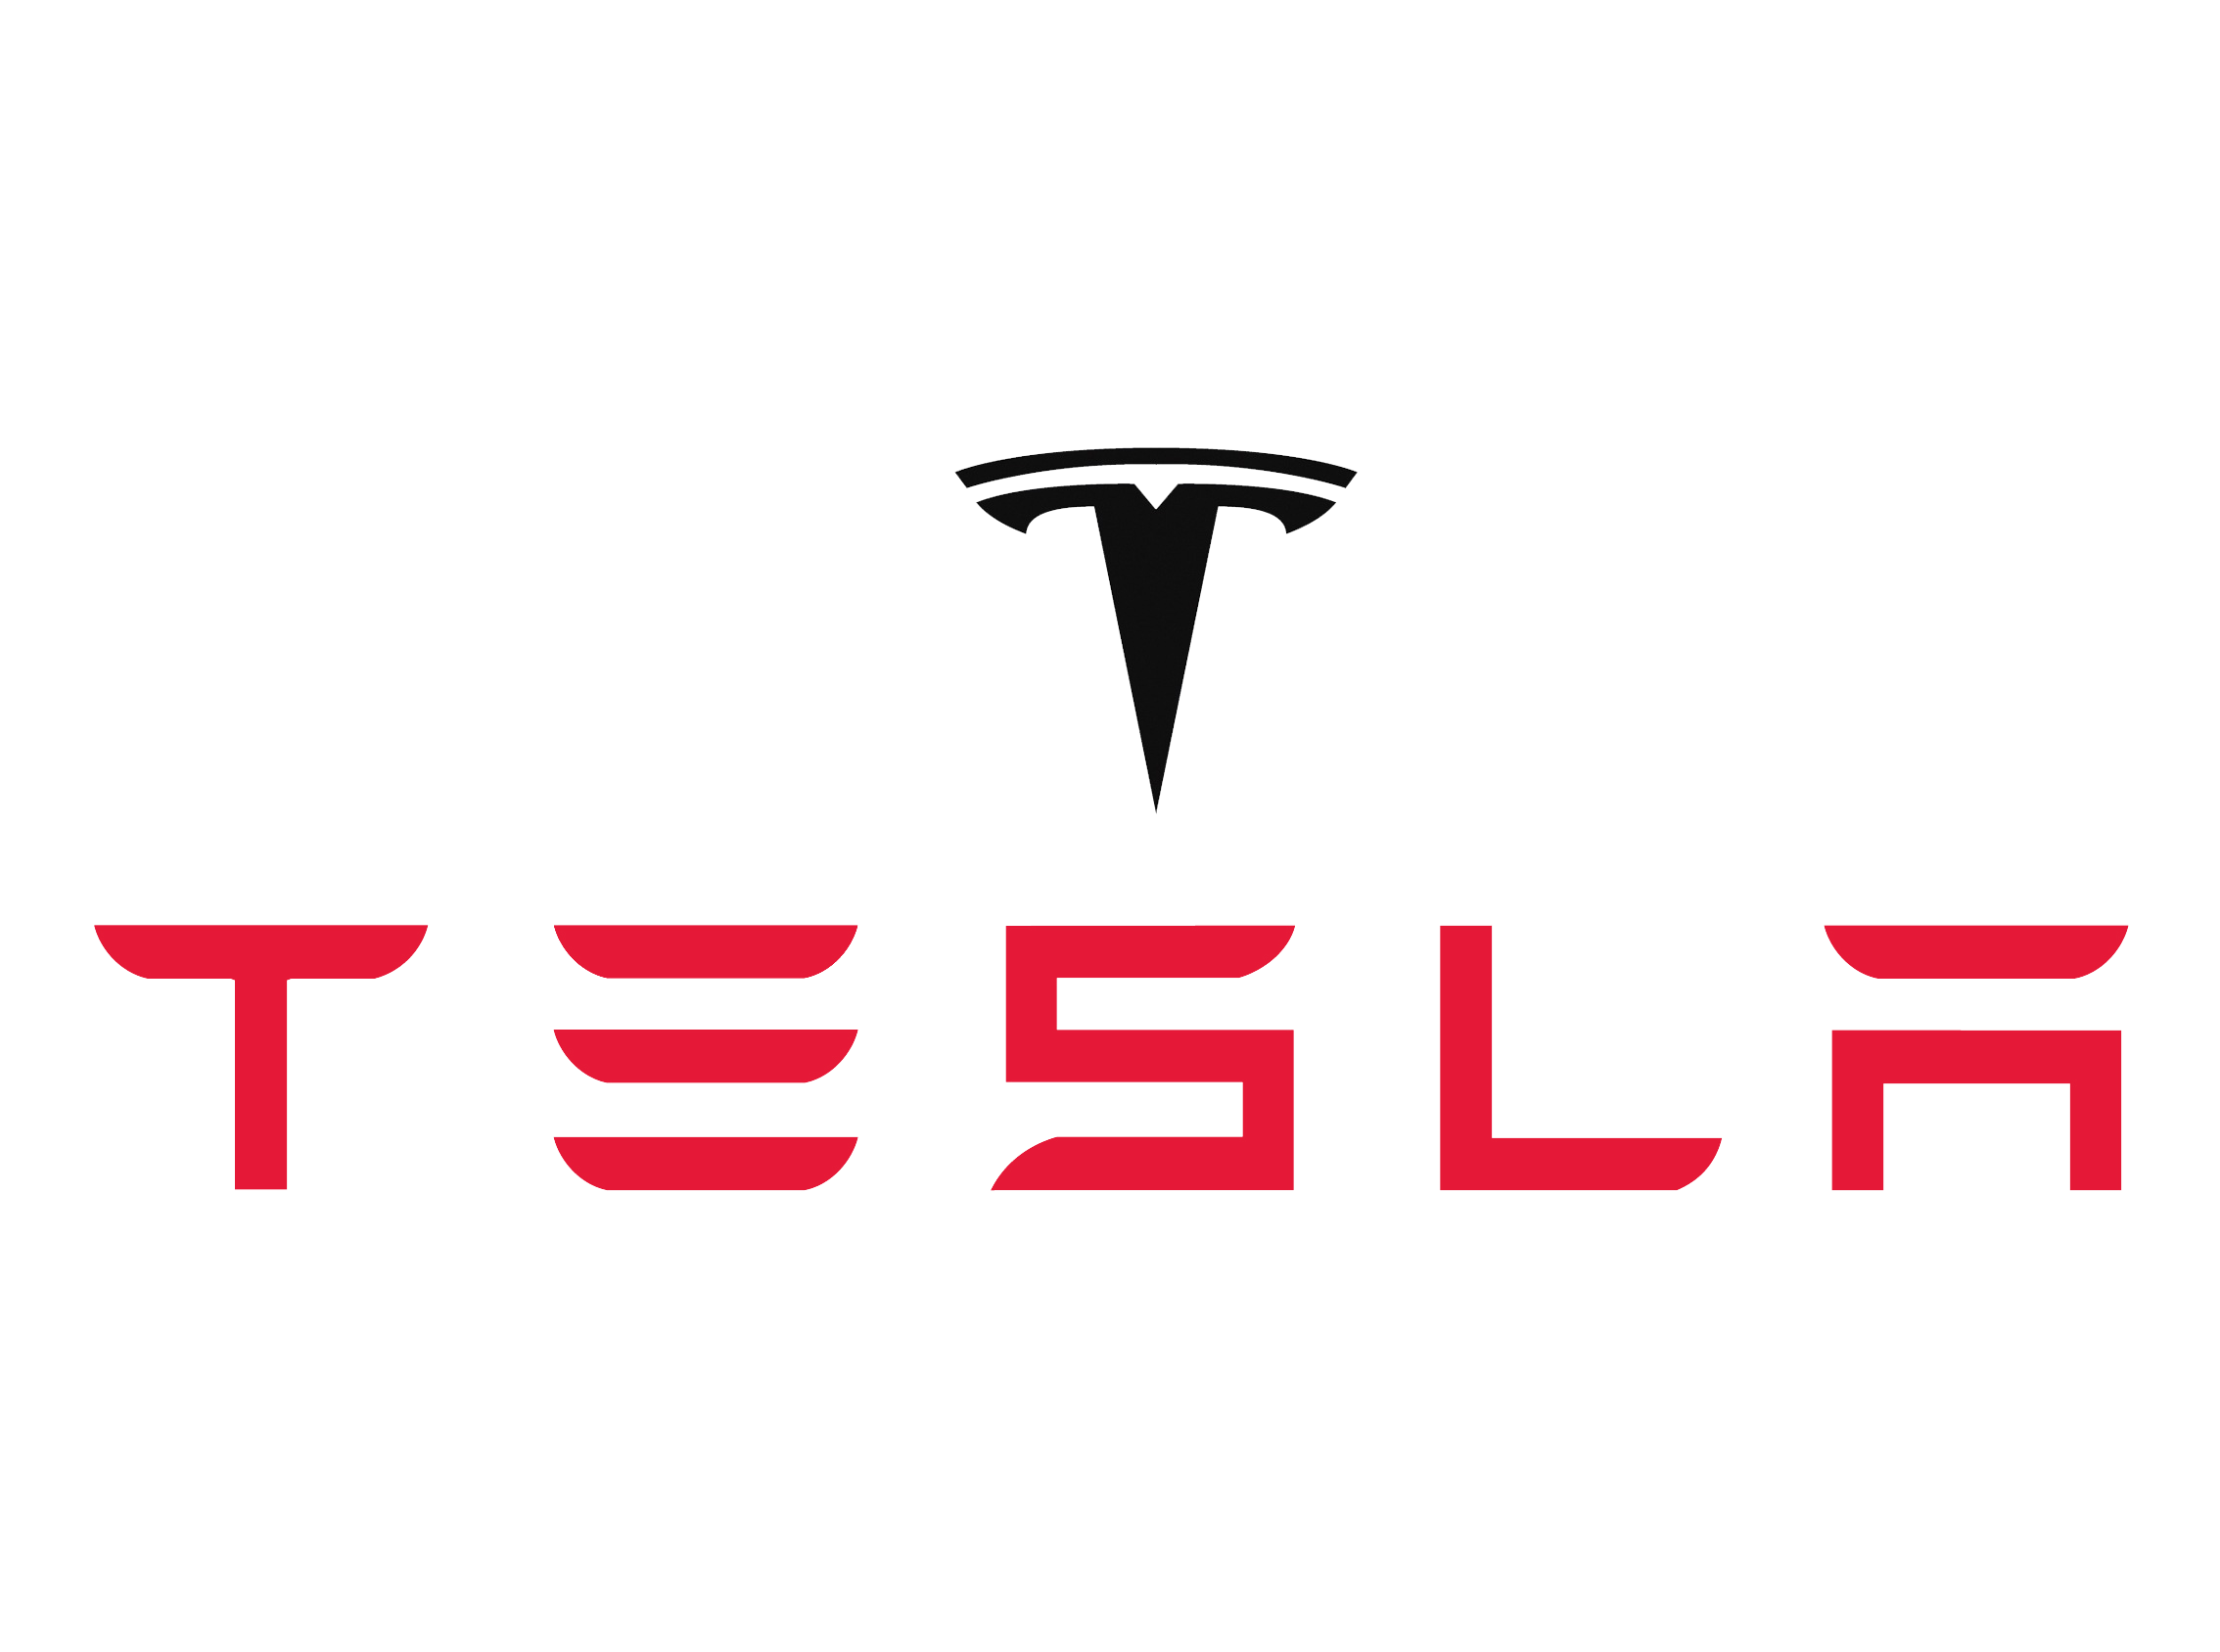 Tesla red and black logo